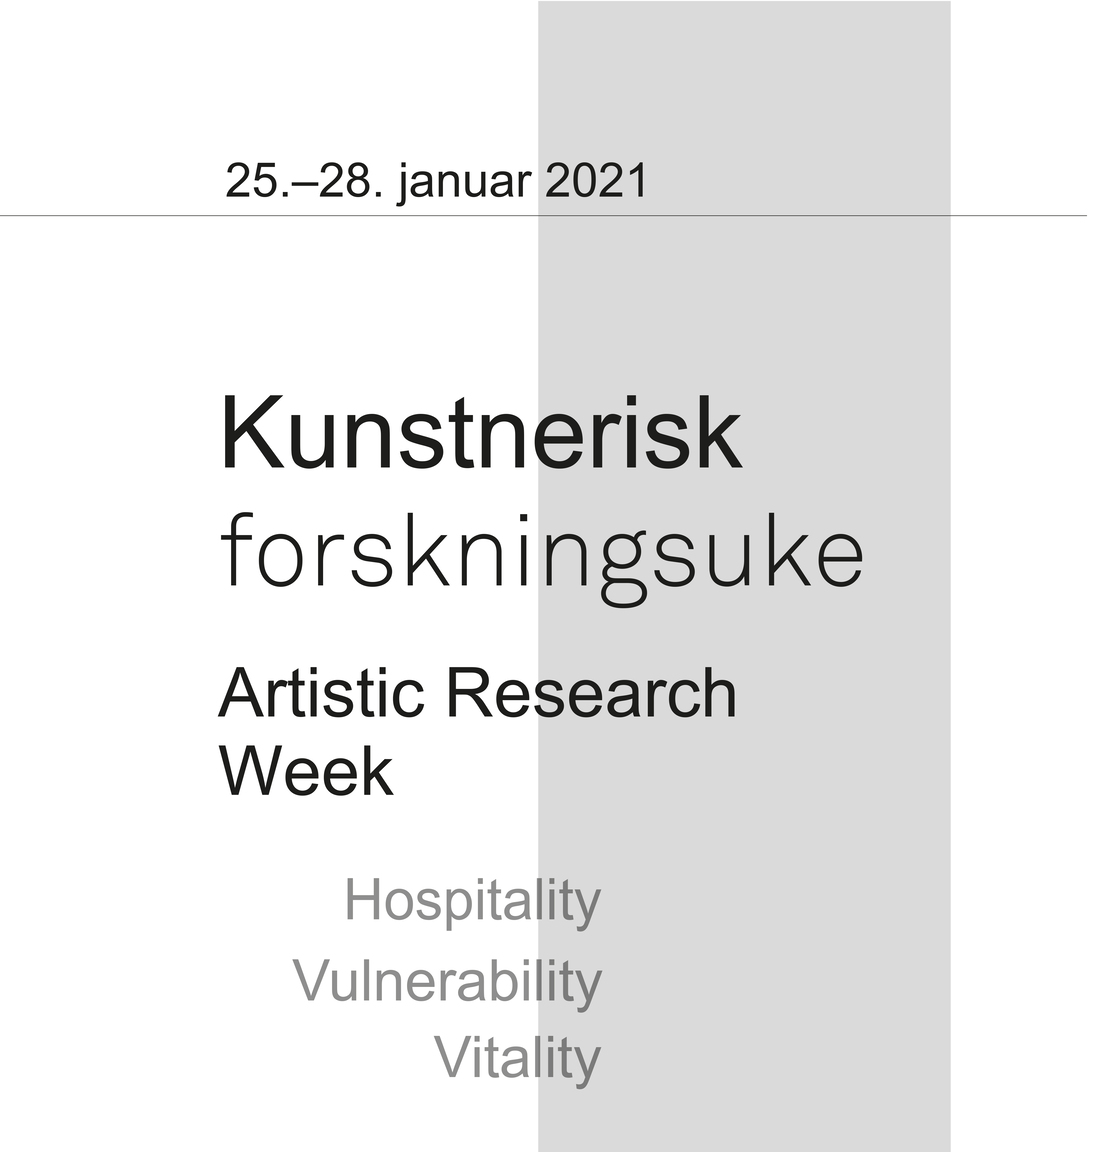 Artistic Research Week 2021